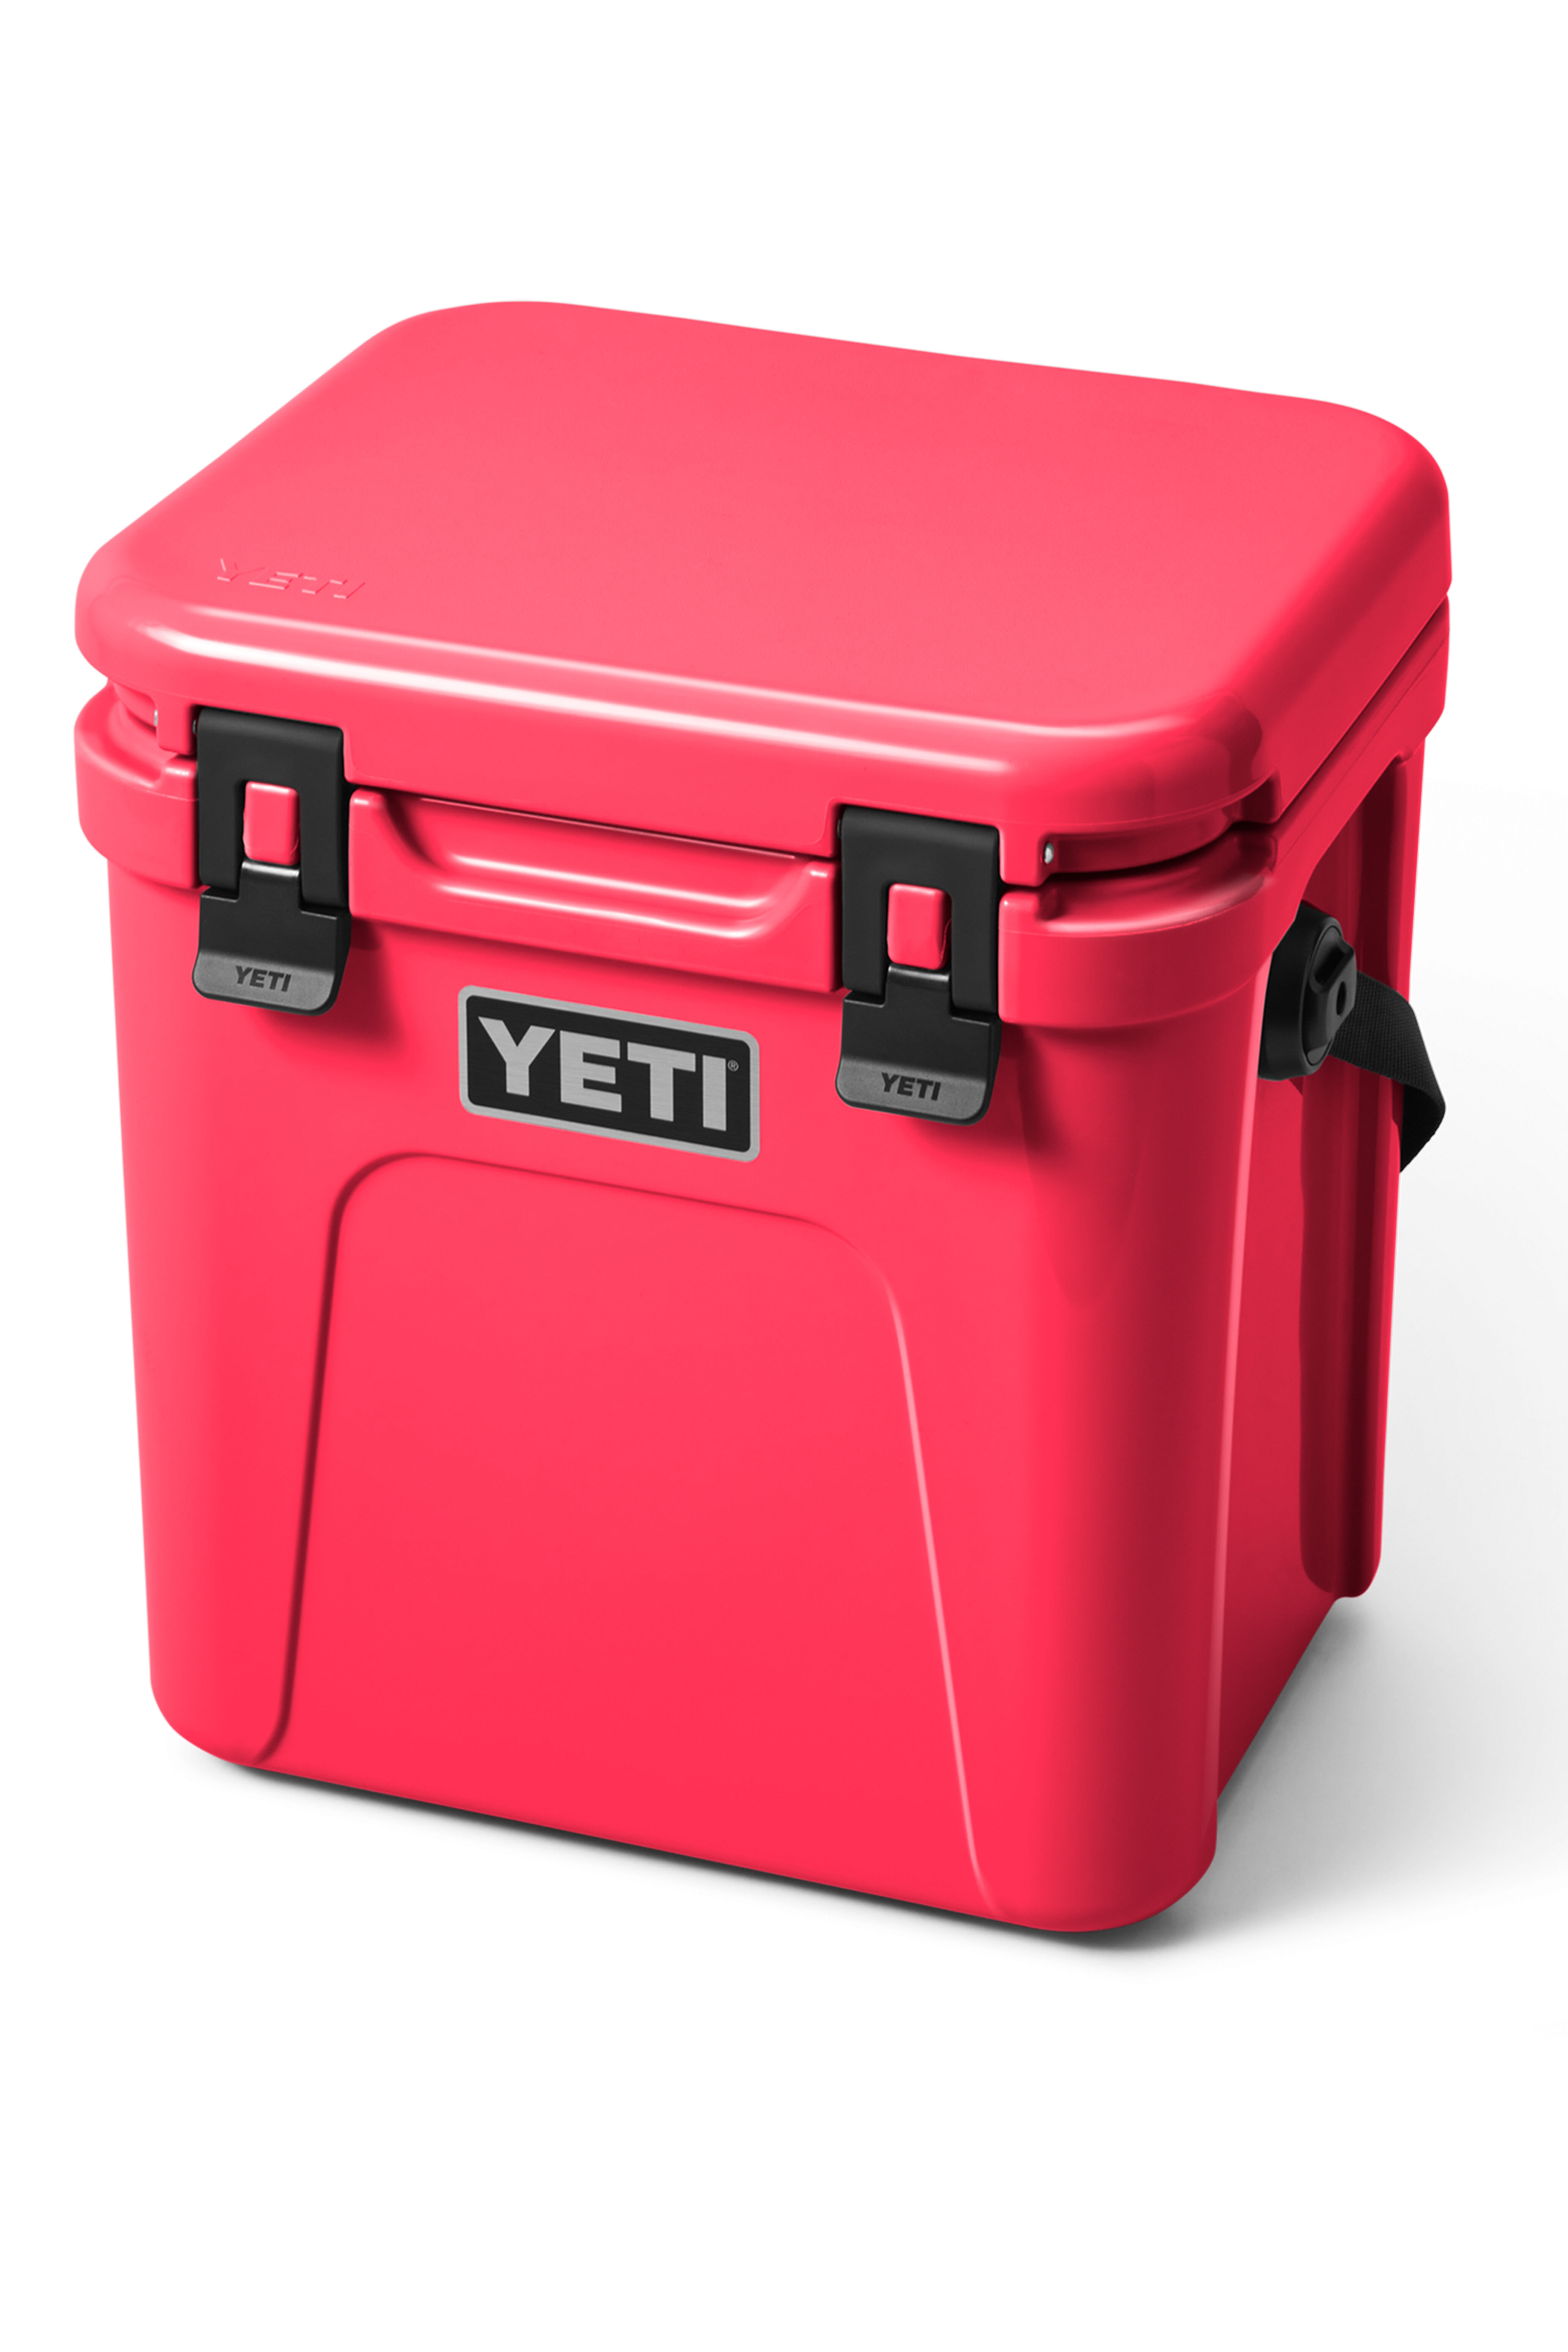 $250 New! YETI Roadie 24 Hard Cooler - Bimimi Pink - lagoagrio.gob.ec